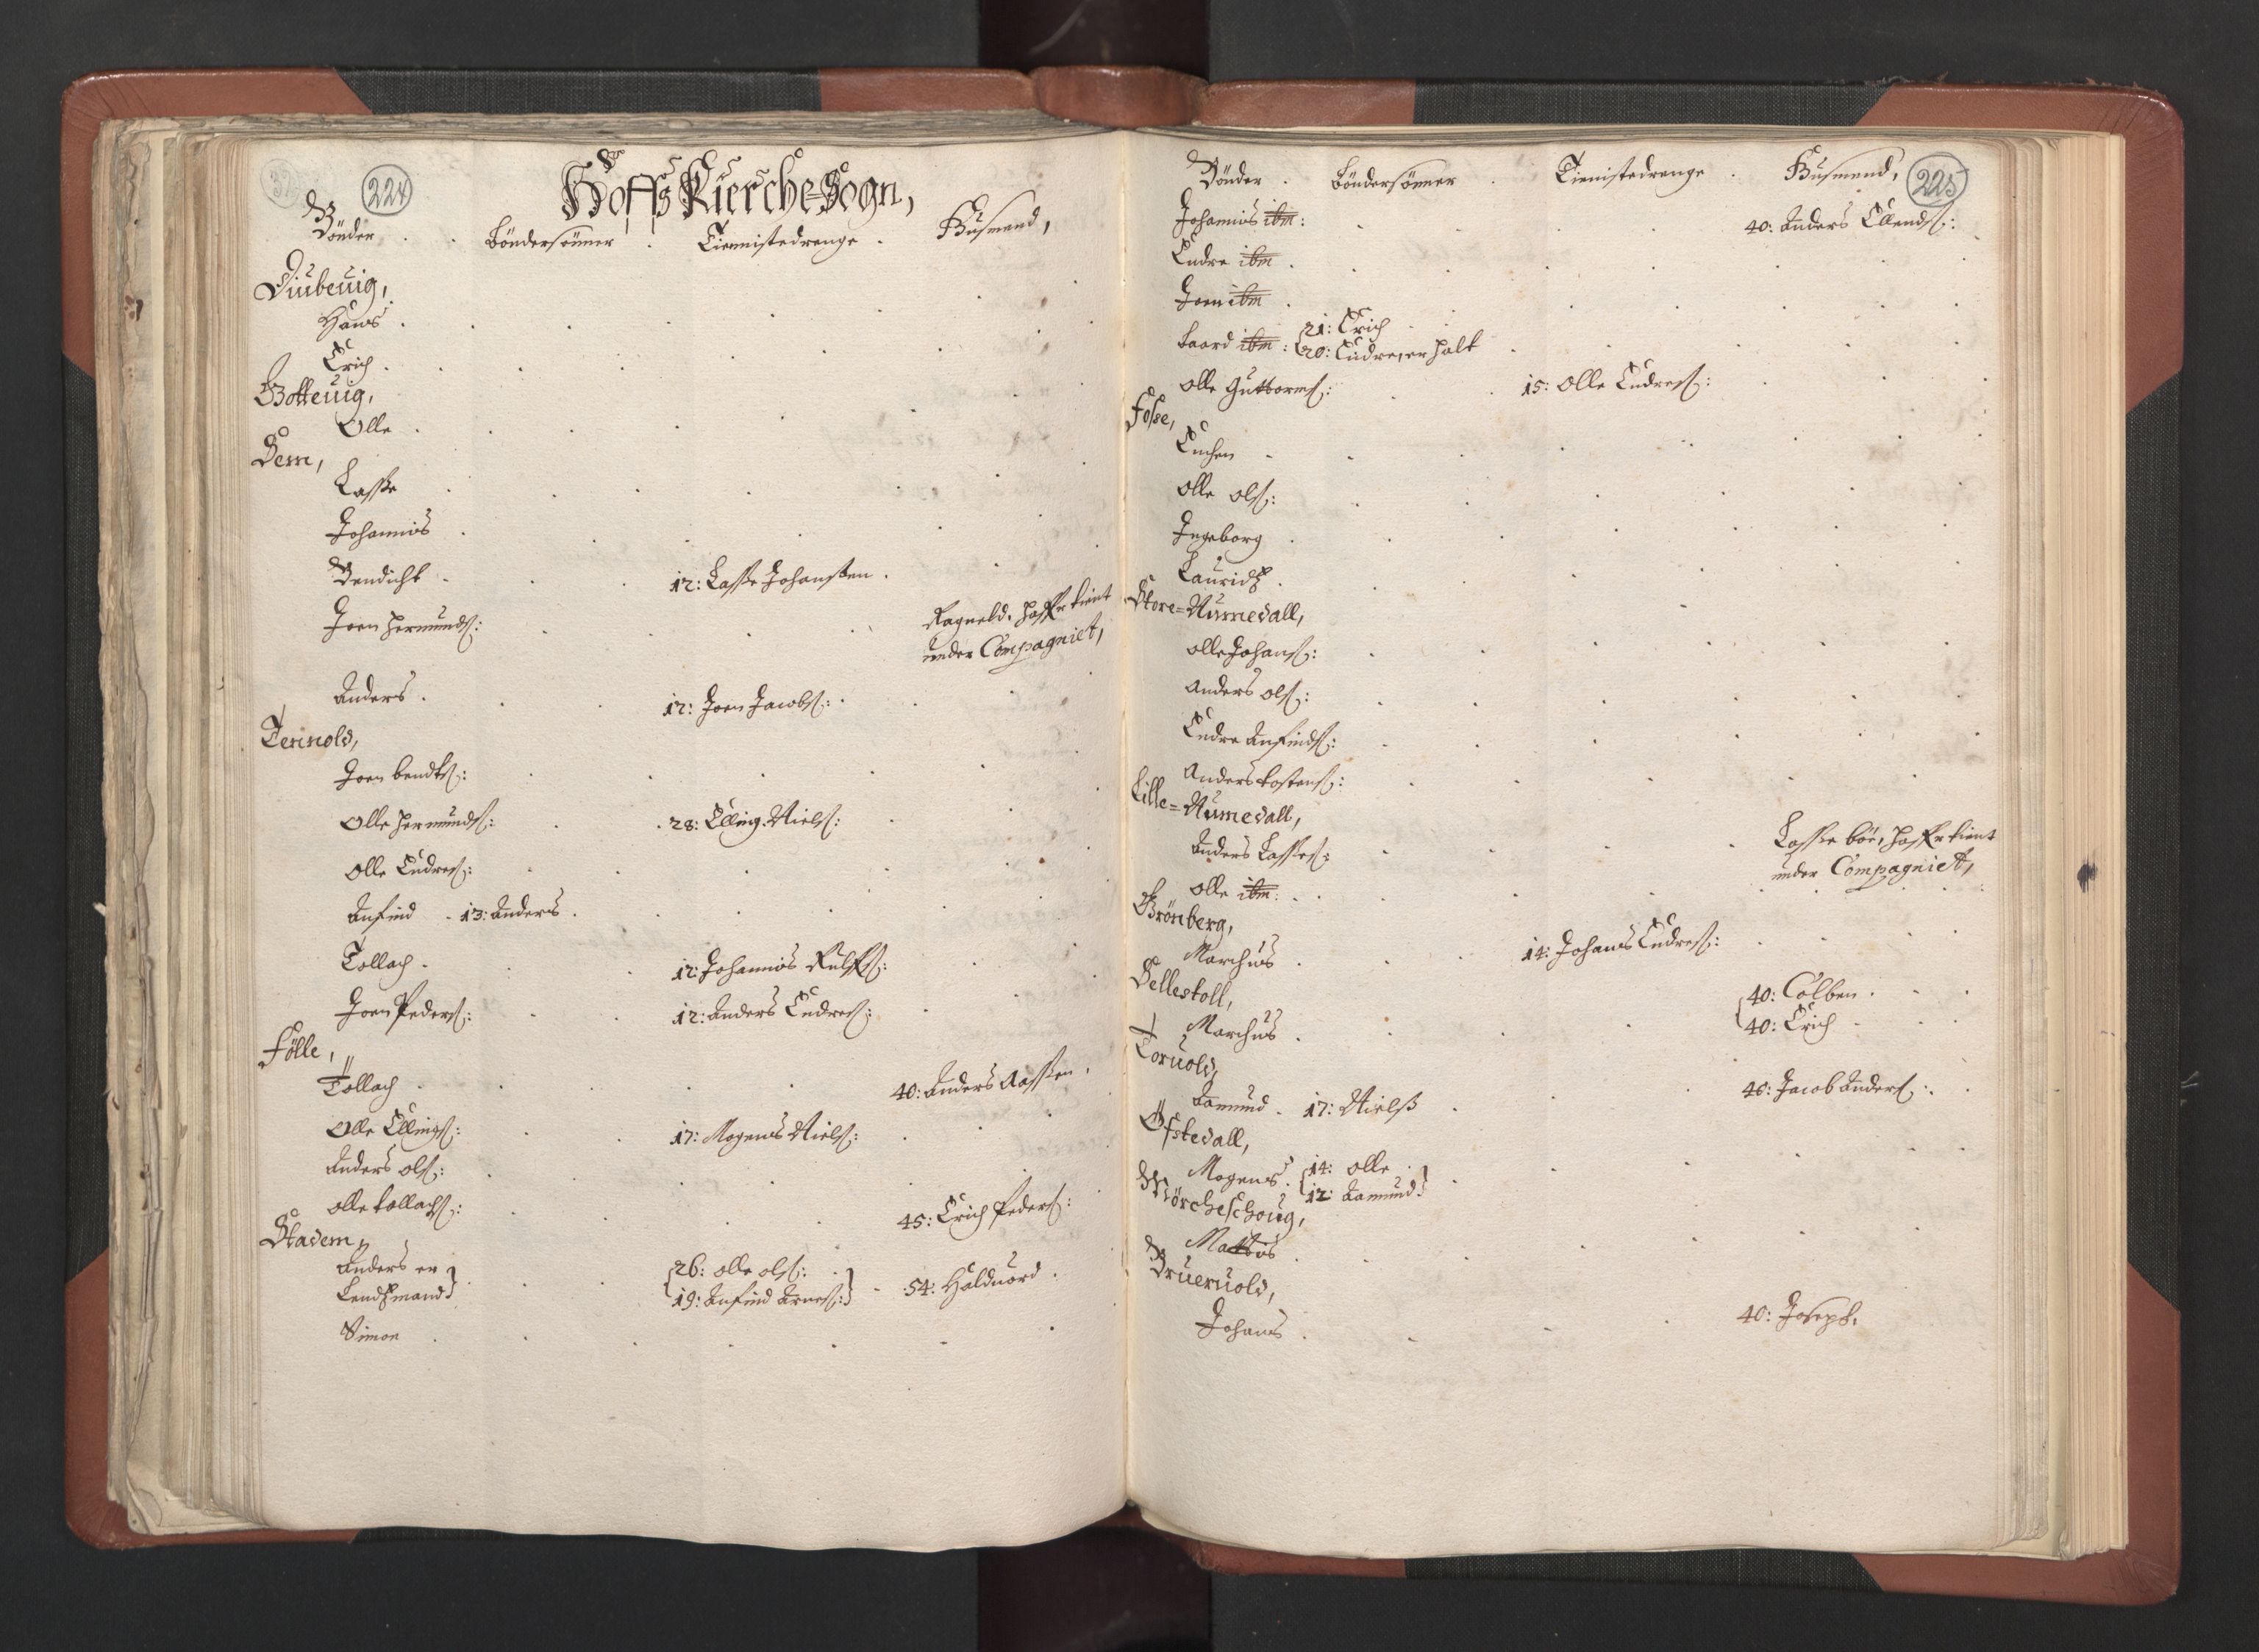 RA, Fogdenes og sorenskrivernes manntall 1664-1666, nr. 14: Hardanger len, Ytre Sogn fogderi og Indre Sogn fogderi, 1664-1665, s. 224-225